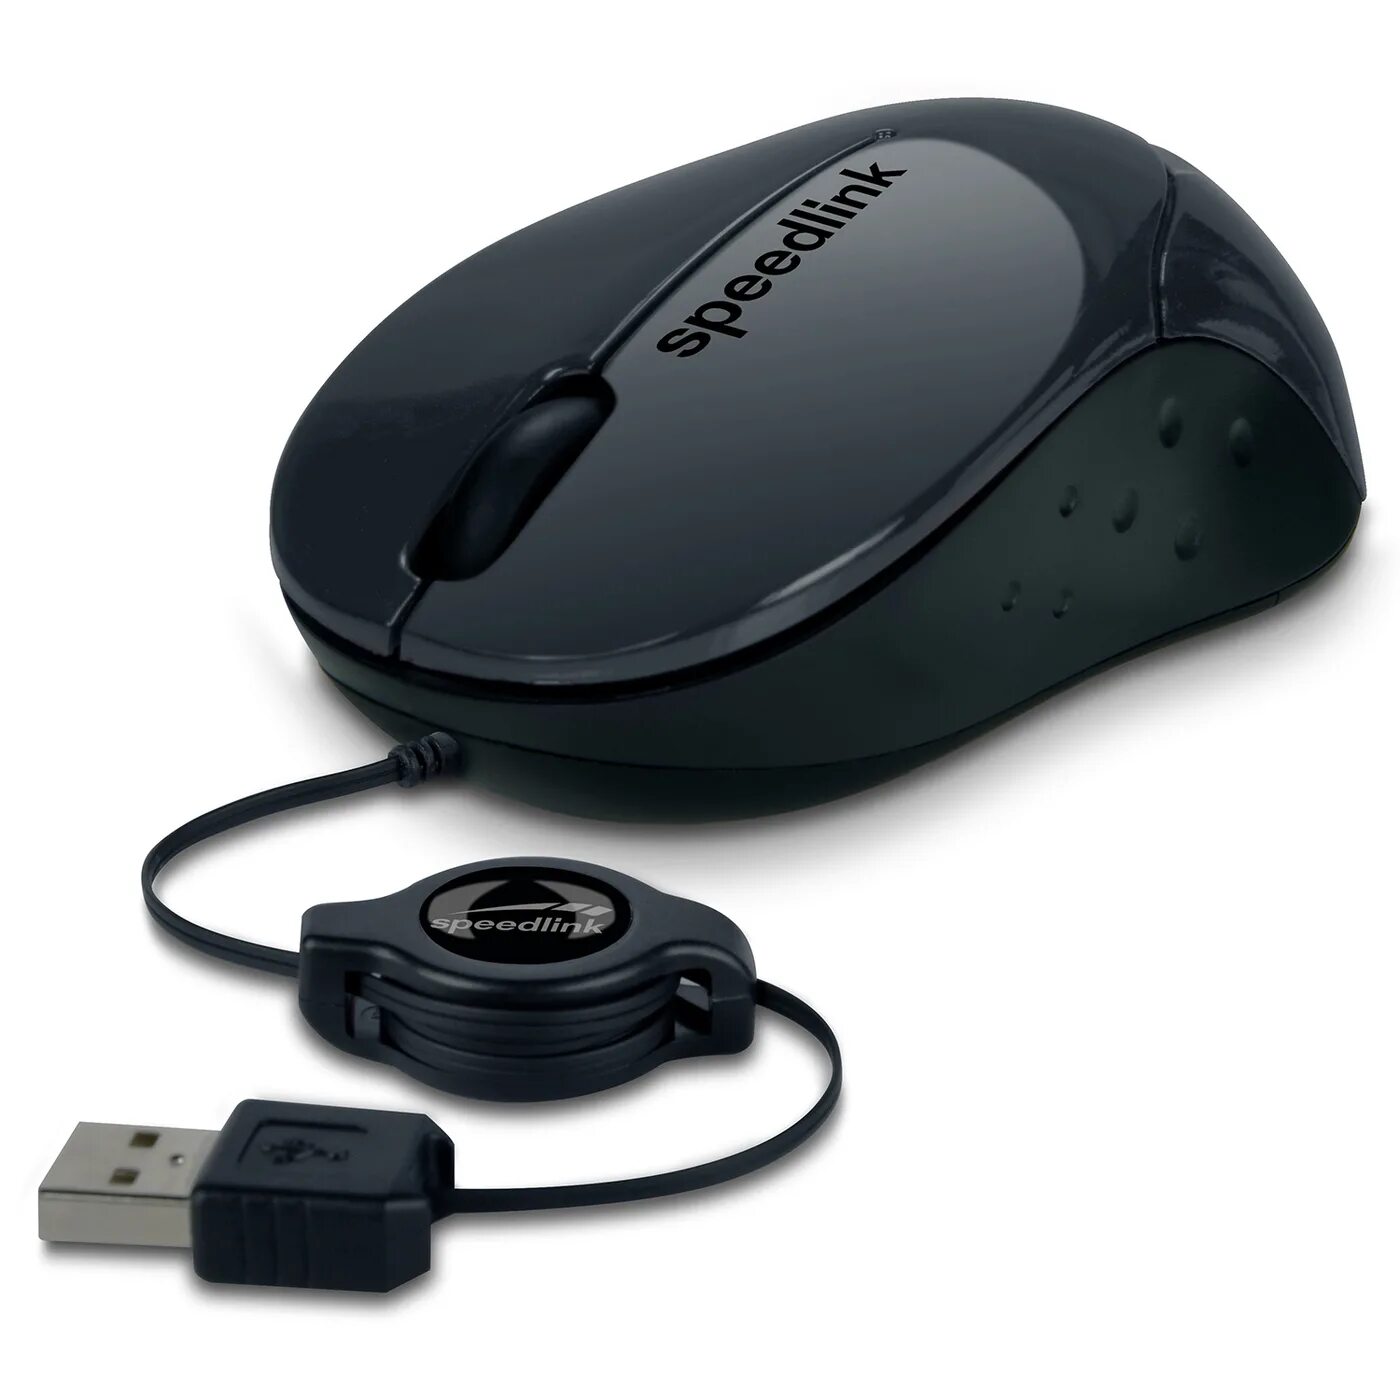 Мышь Speedlink Beenie. Мышь Speedlink Kappa Mouse Black USB. Speedlink LEDGY Mouse Silent. ZG-rs3325-BK мышь. Мышь коре